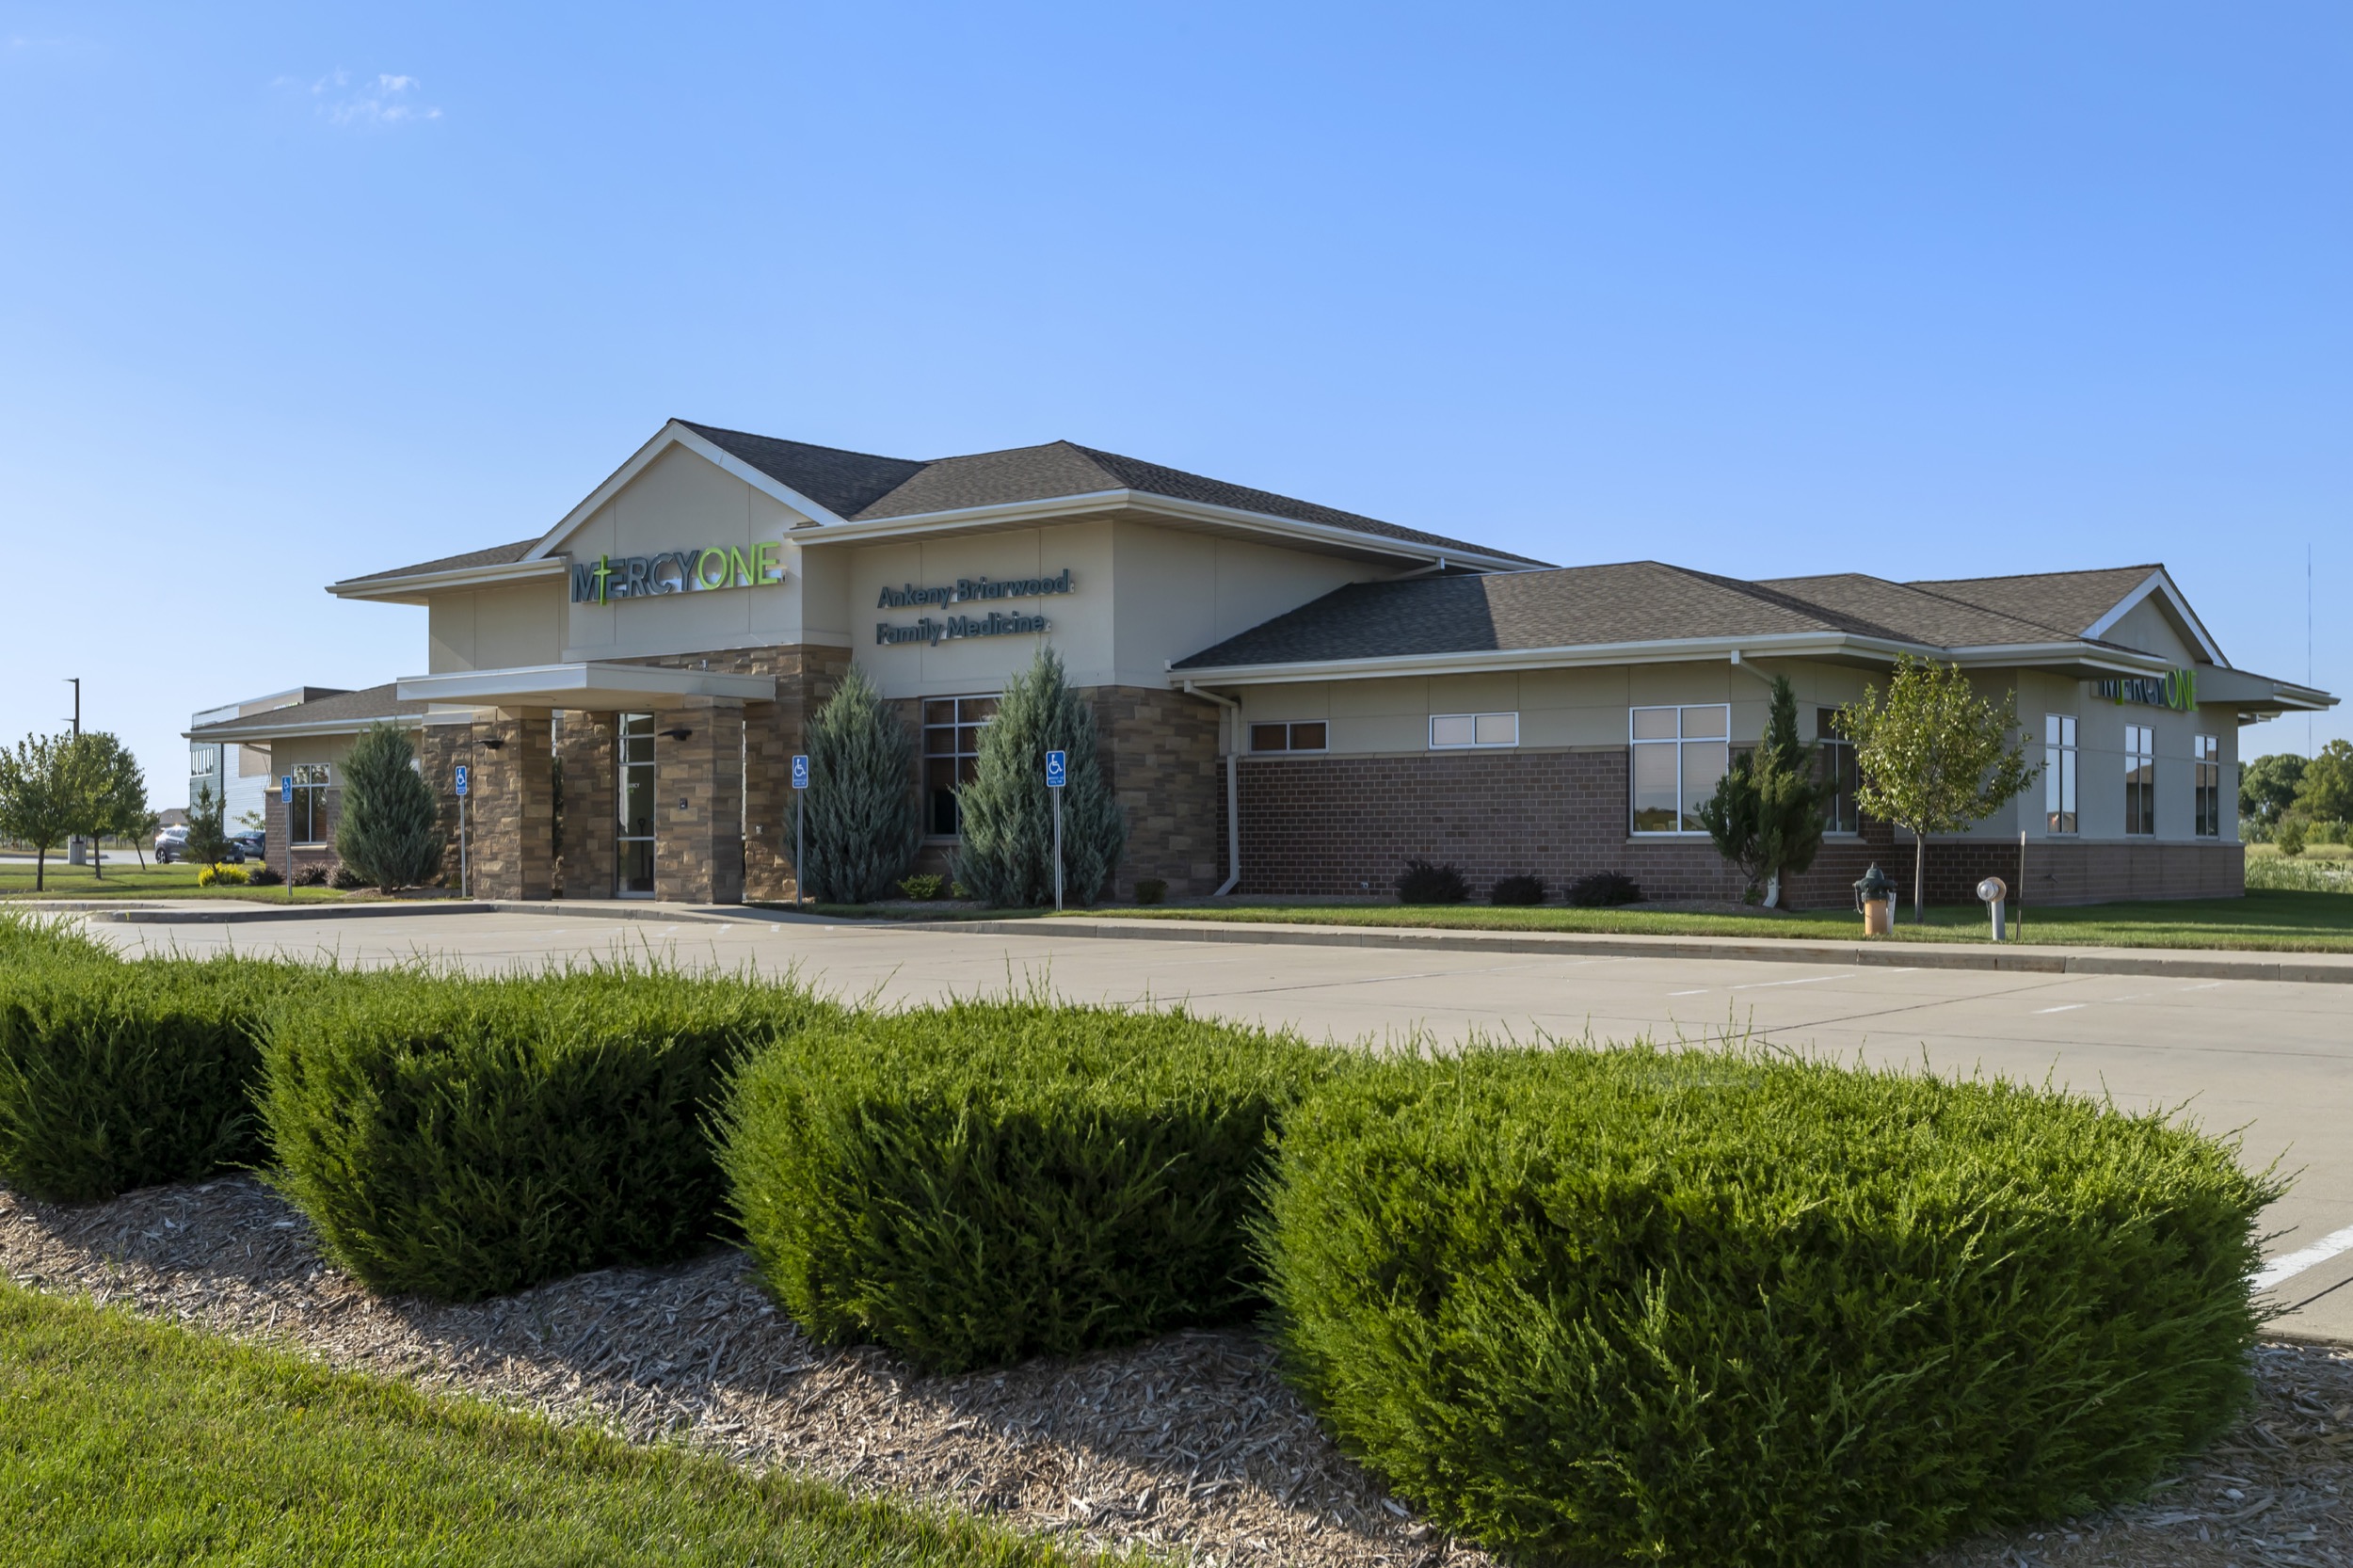 MercyOne Iowa - Remedy Medical Properties